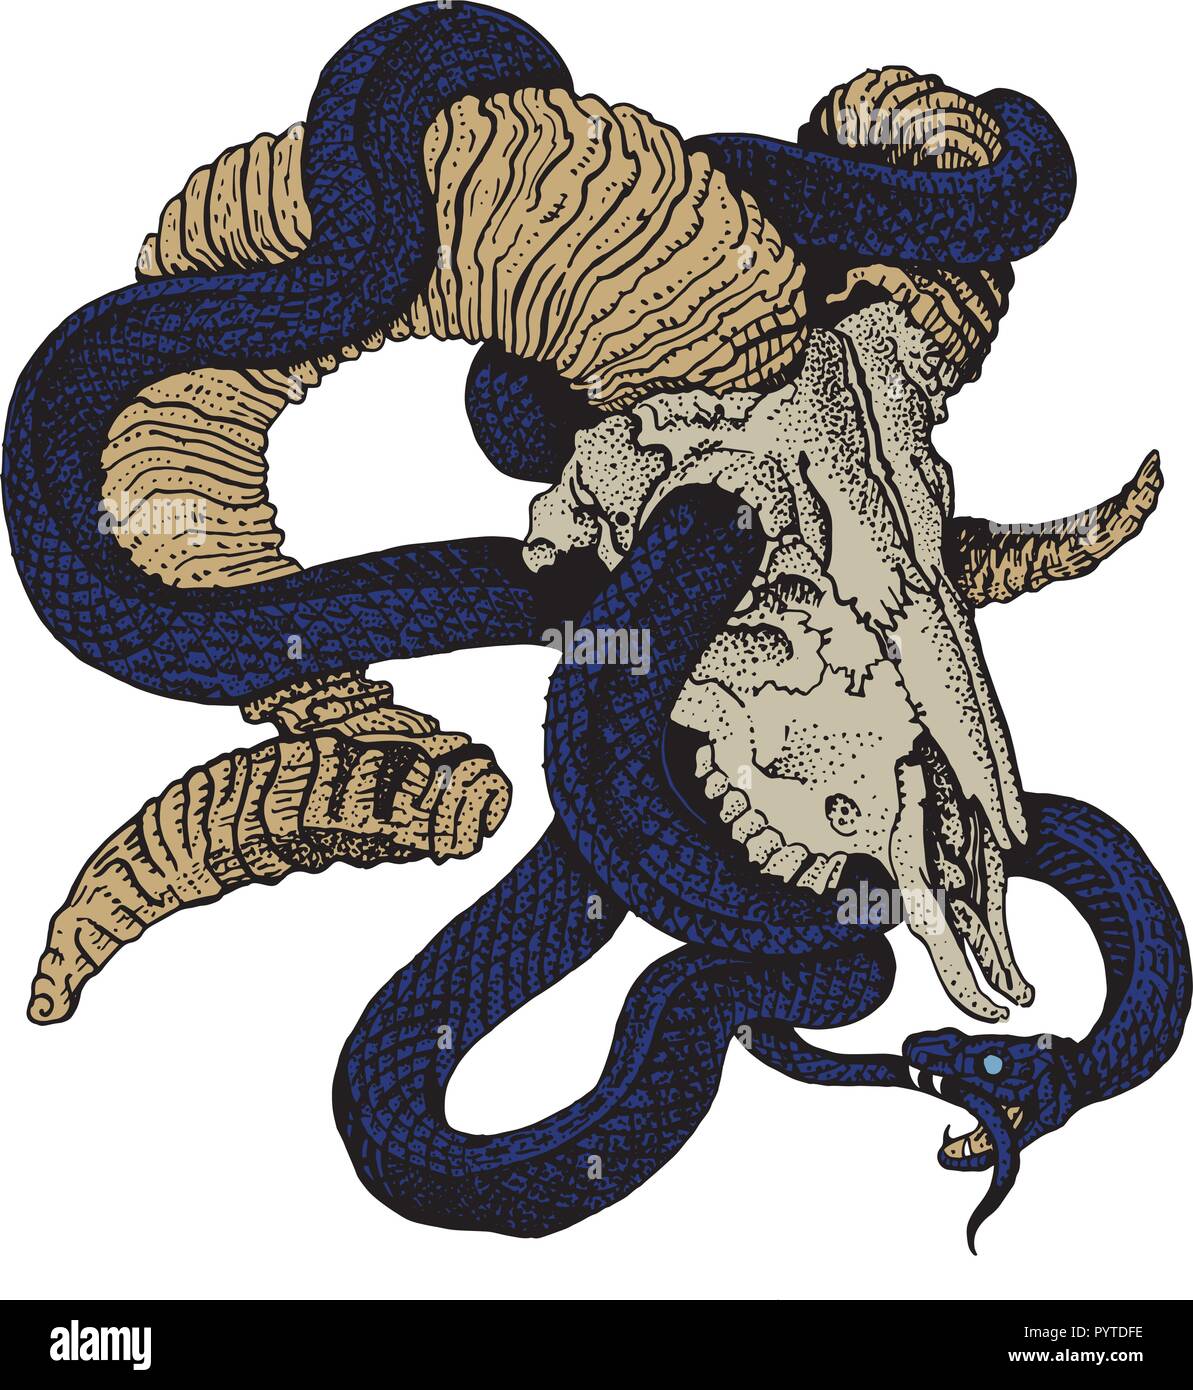 Mythological Ouroboros snake and goat skull. Hand drawn engraving style vector illustration. Sticker, poster, t shirt print, tattoo design. Rock, heav Stock Vector